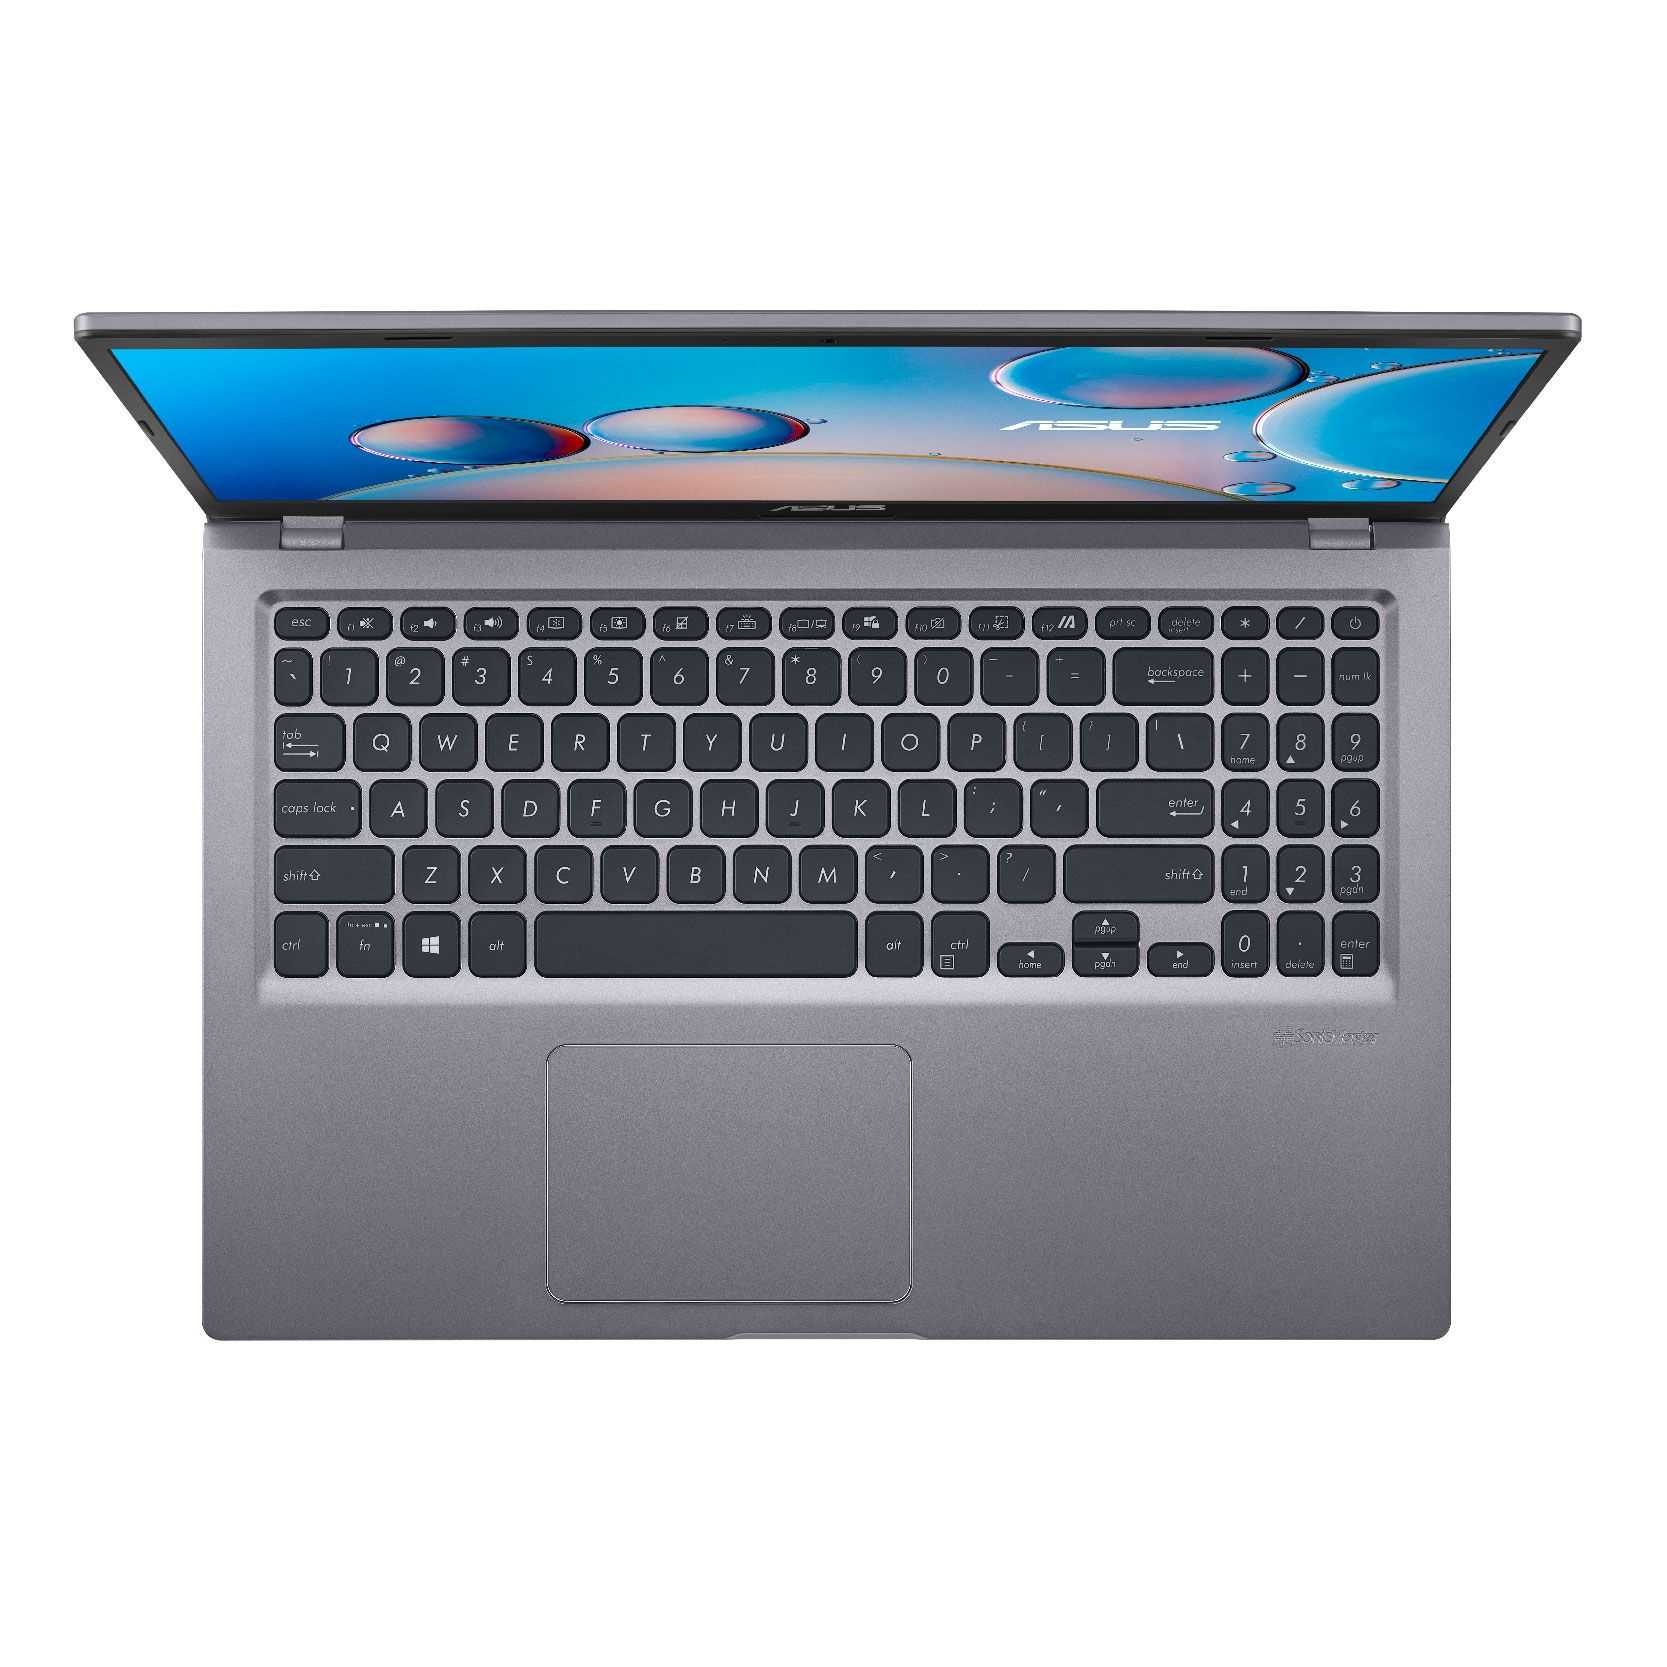 Asus D515DA Laptop, 15.6 Inch, AMD Ryzen 3-3250U, 1TB HDD, 4GB RAM, AMD Radeon Graphics , Windows 11 - Slate Grey